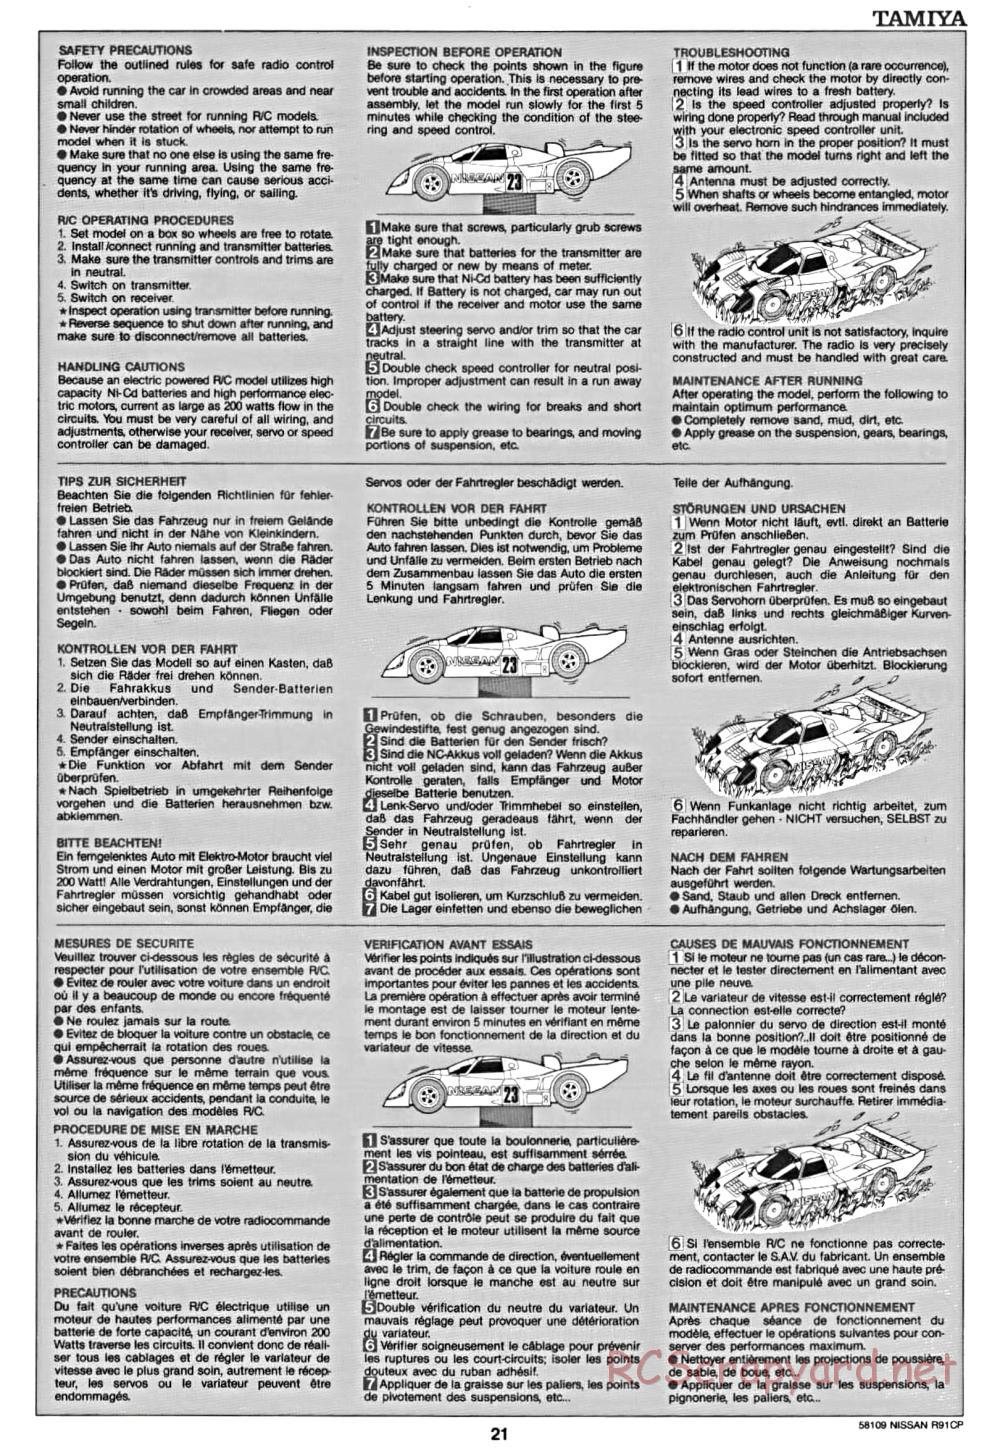 Tamiya - Nissan R91CP - Group-C Chassis - Manual - Page 21